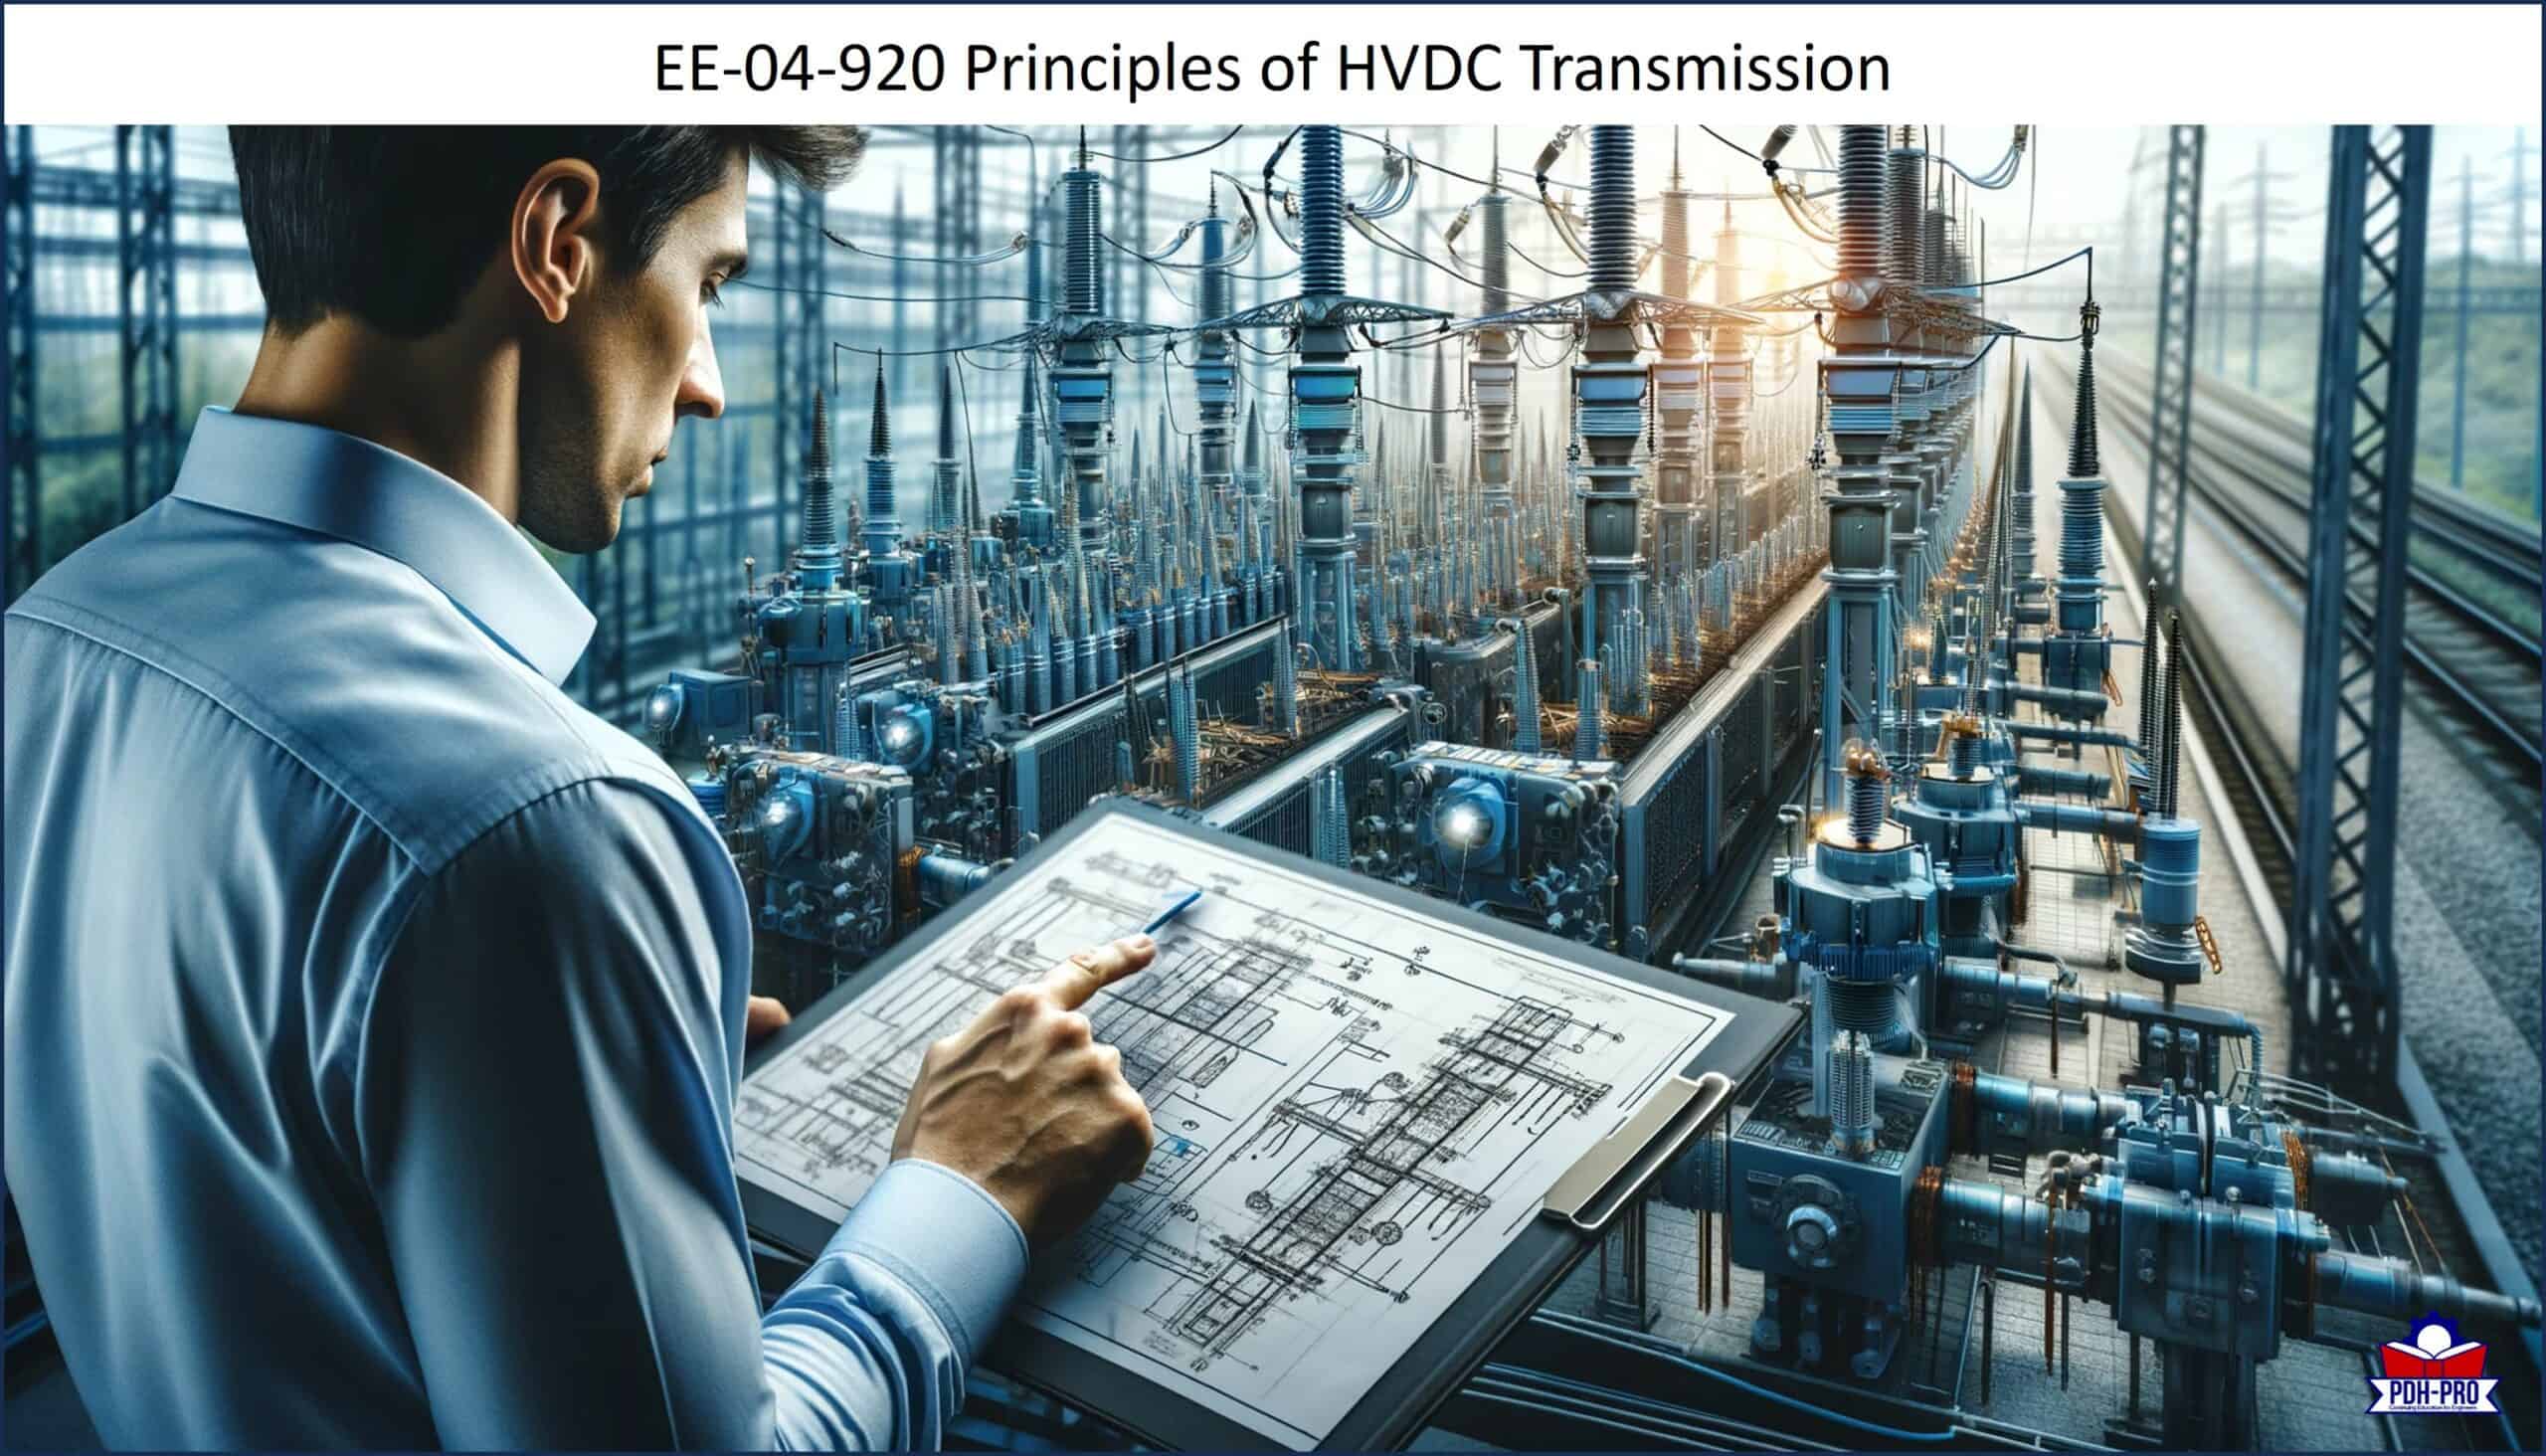 Principles of HVDC Transmission